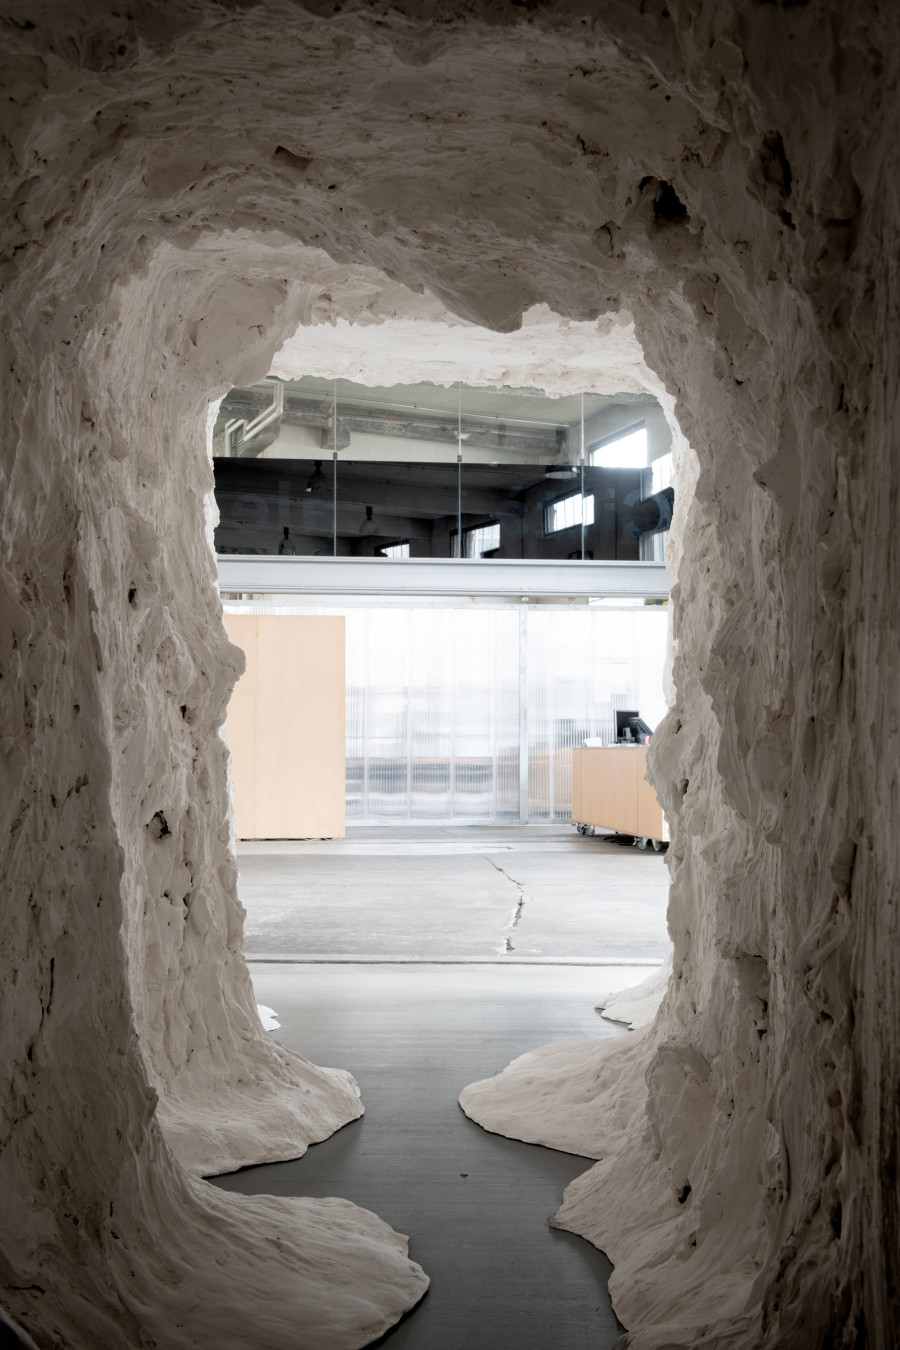 Sara Masüger, Tunnel, 2014/2020, Erworben vom Kunstmuseum St.Gallen 2020, Foto: Sebastian Stadler